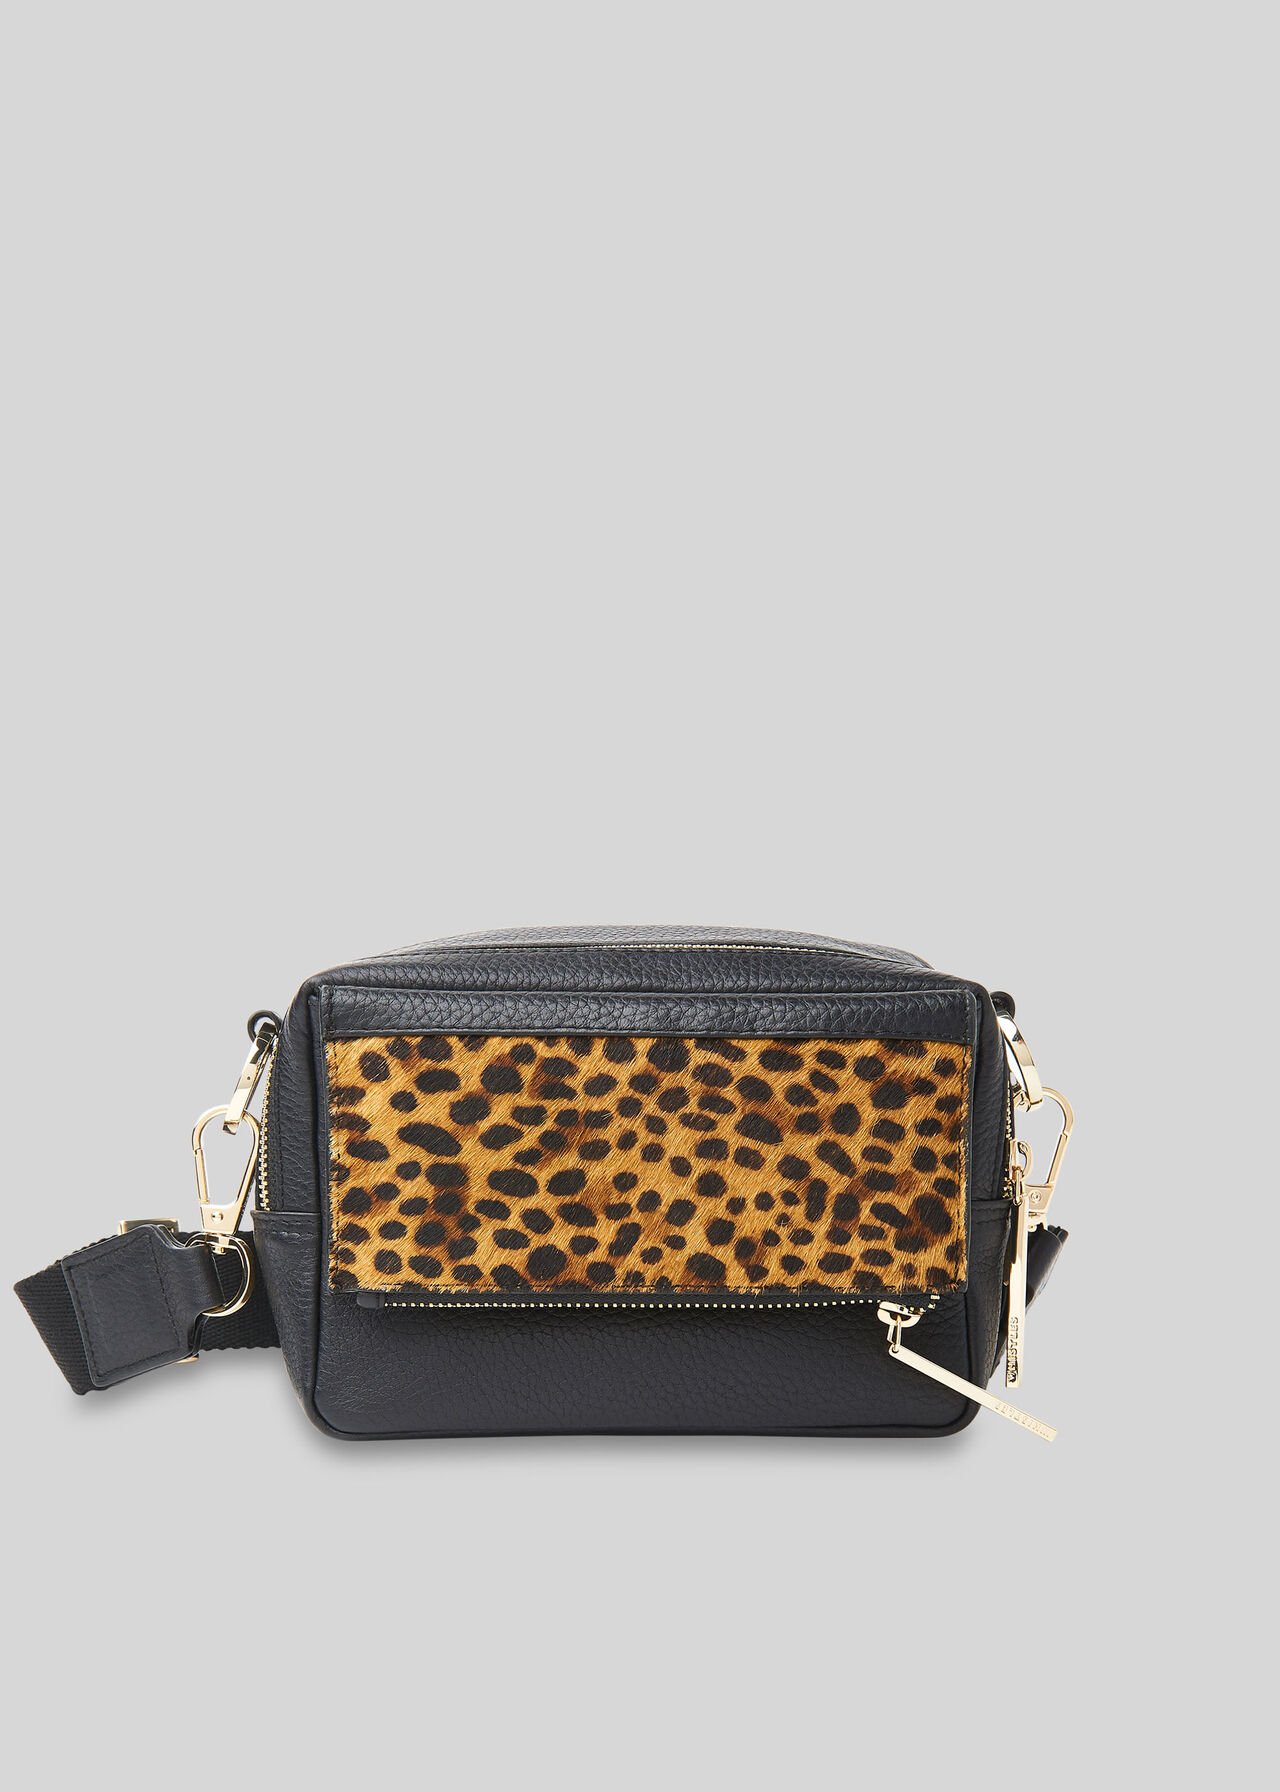 Bibi Leopard Crossbody Bag Black/Multi